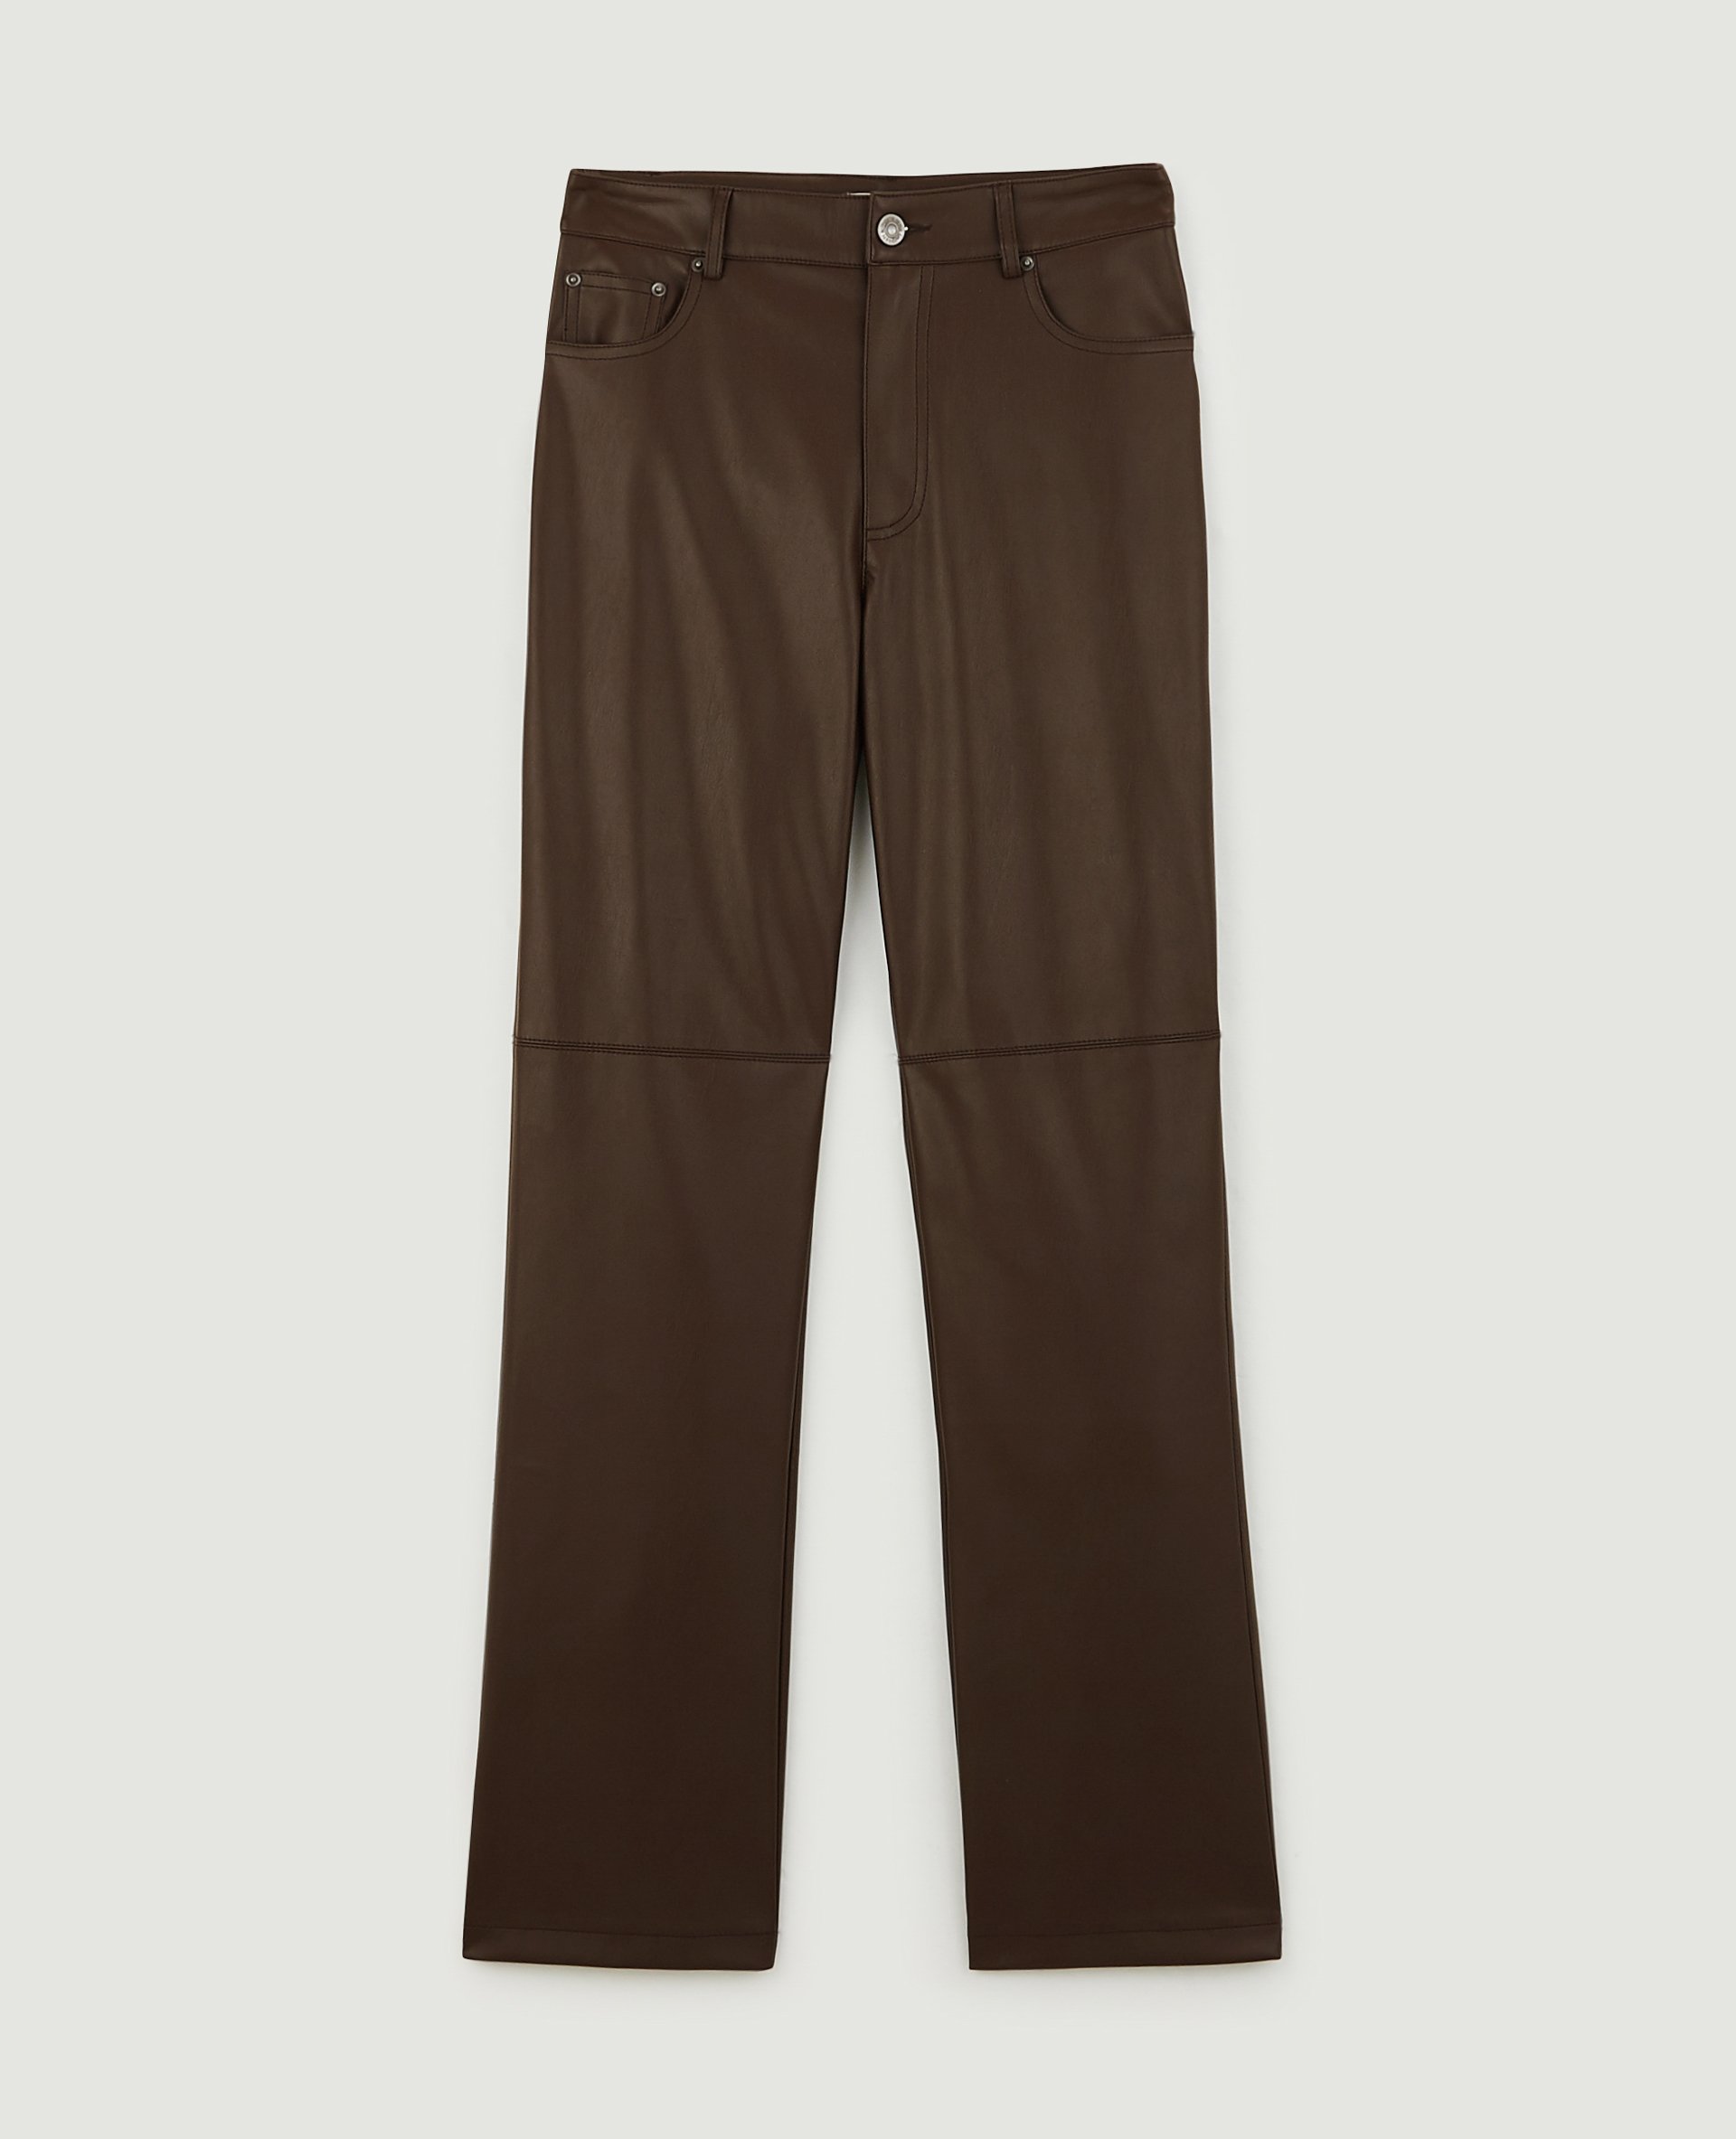 Pantalon droit simili cuir marron - Pimkie